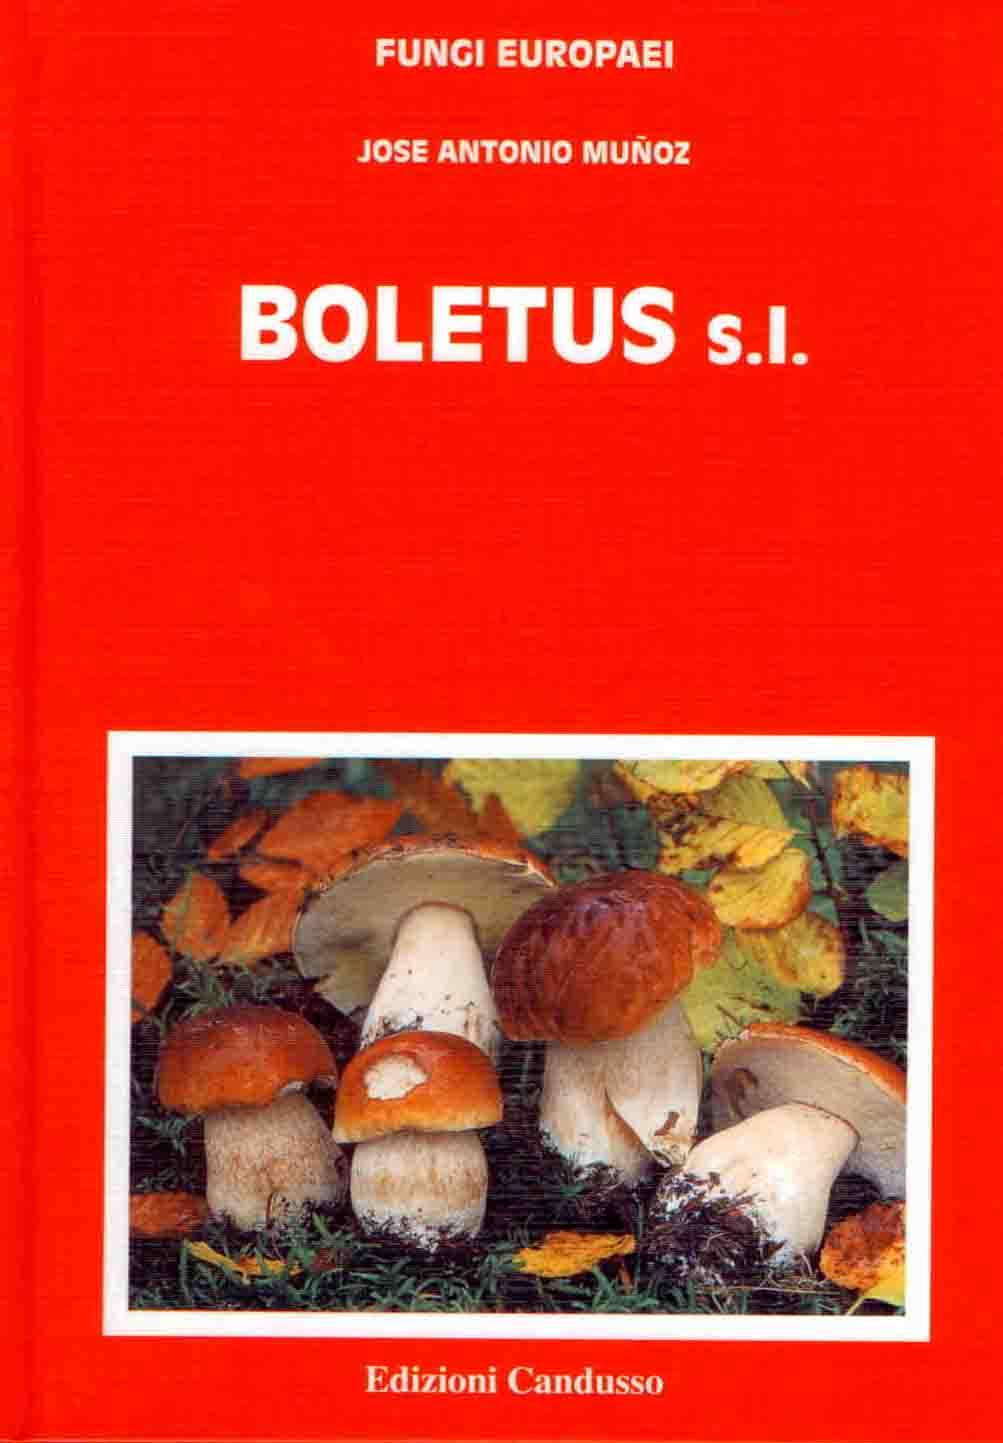 Boletus s. l. Ediz. spagnola (Fungi europaei)